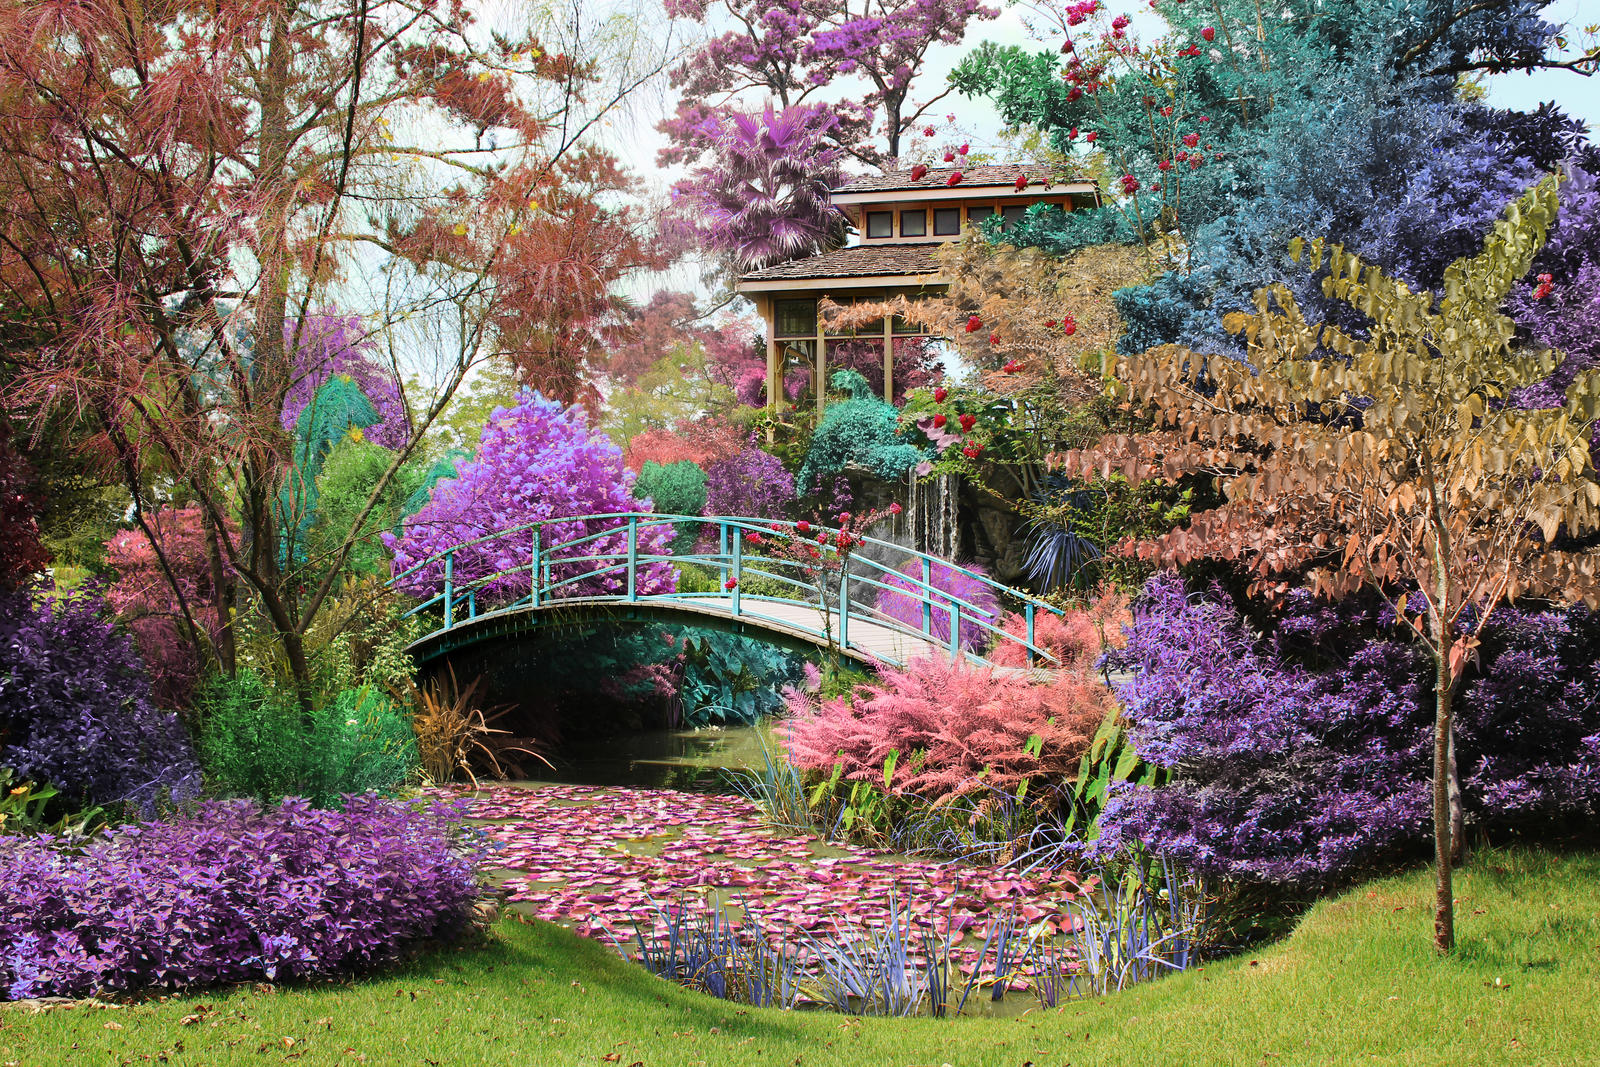 Magical Garden by Vaelz on DeviantArt